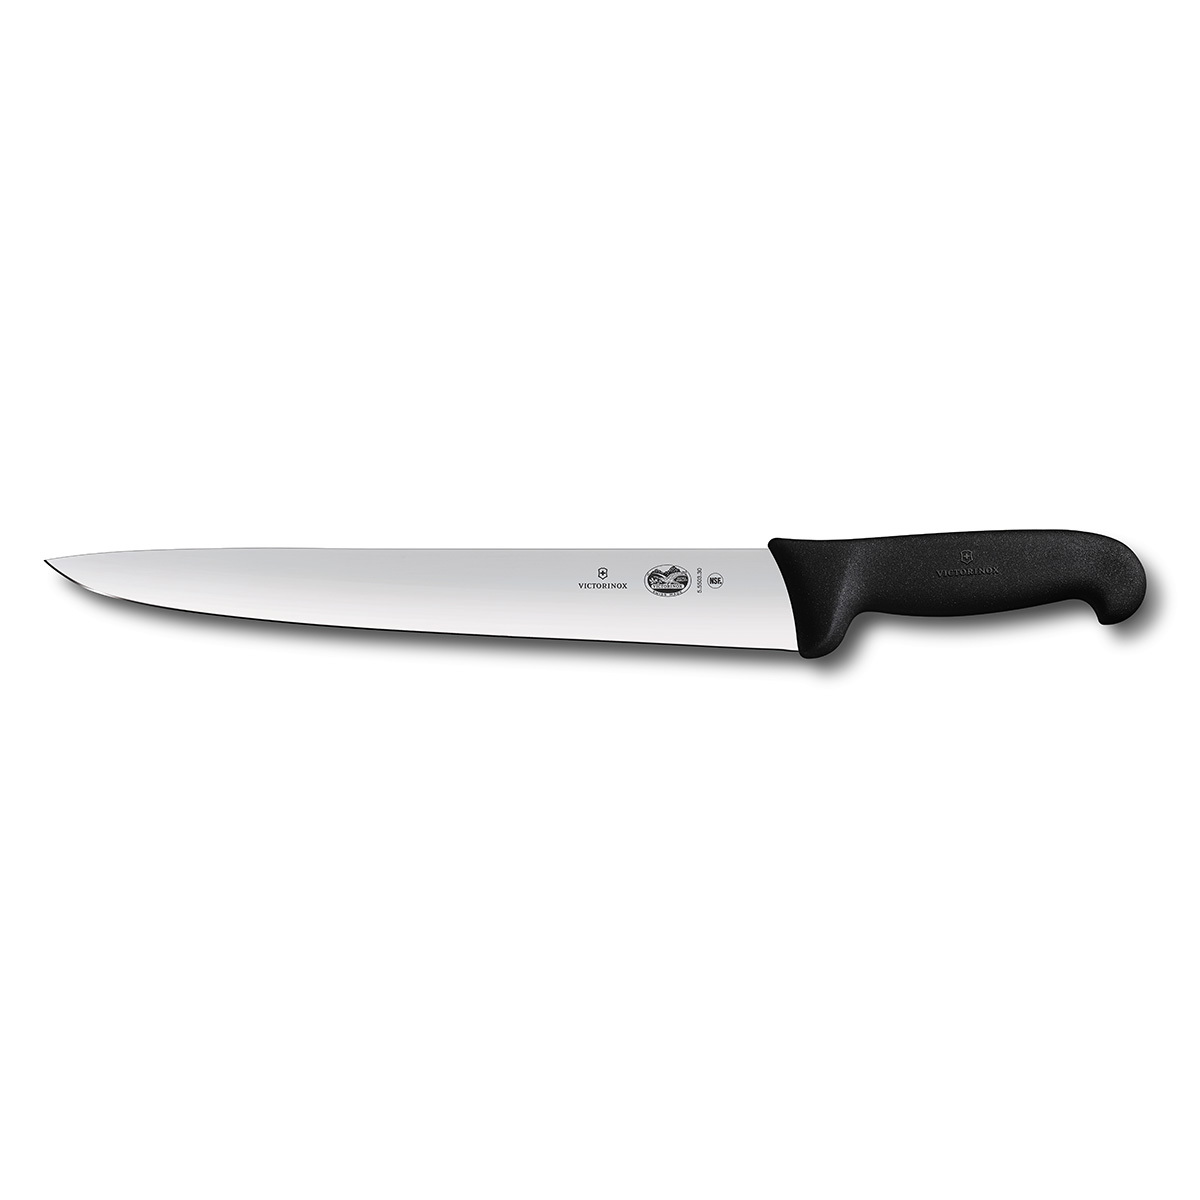 Кухонный нож стейка Victorinox 5.5503.30 кухонный нож для стейка ladina